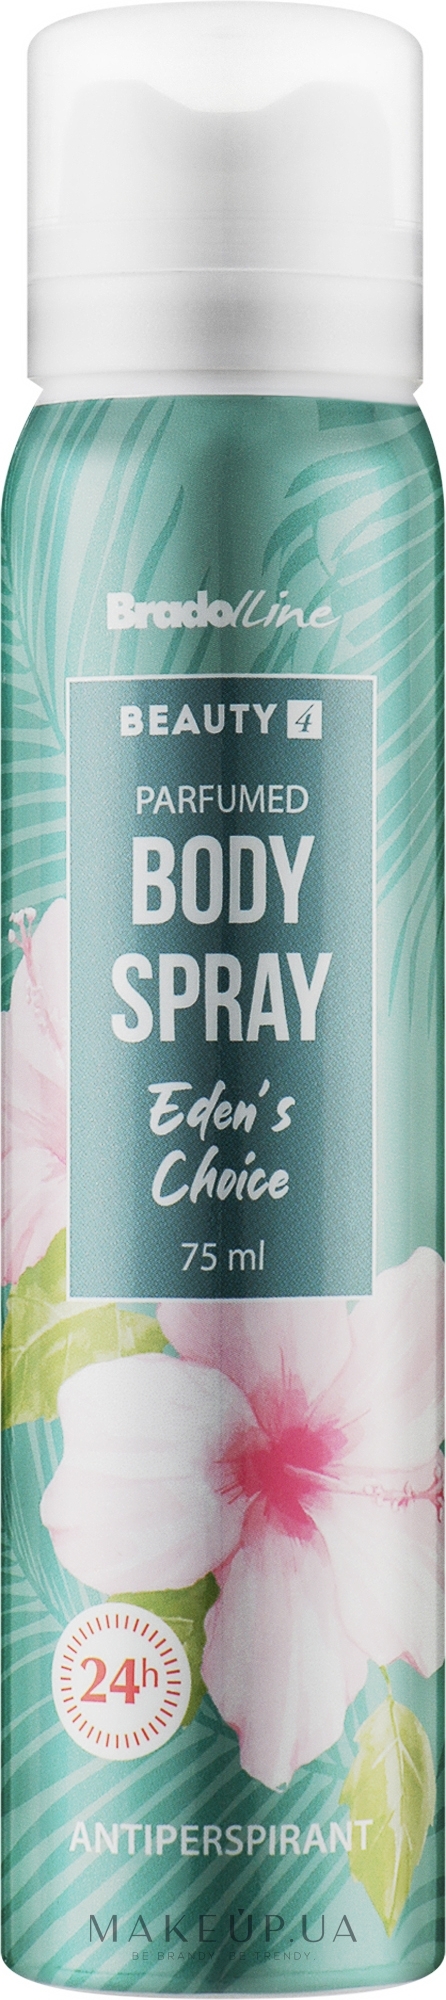 Антиперспирант-спрей для тела "Edens Choice" - Bradoline Beauty 4 Body Spray Antiperspirant — фото 75ml